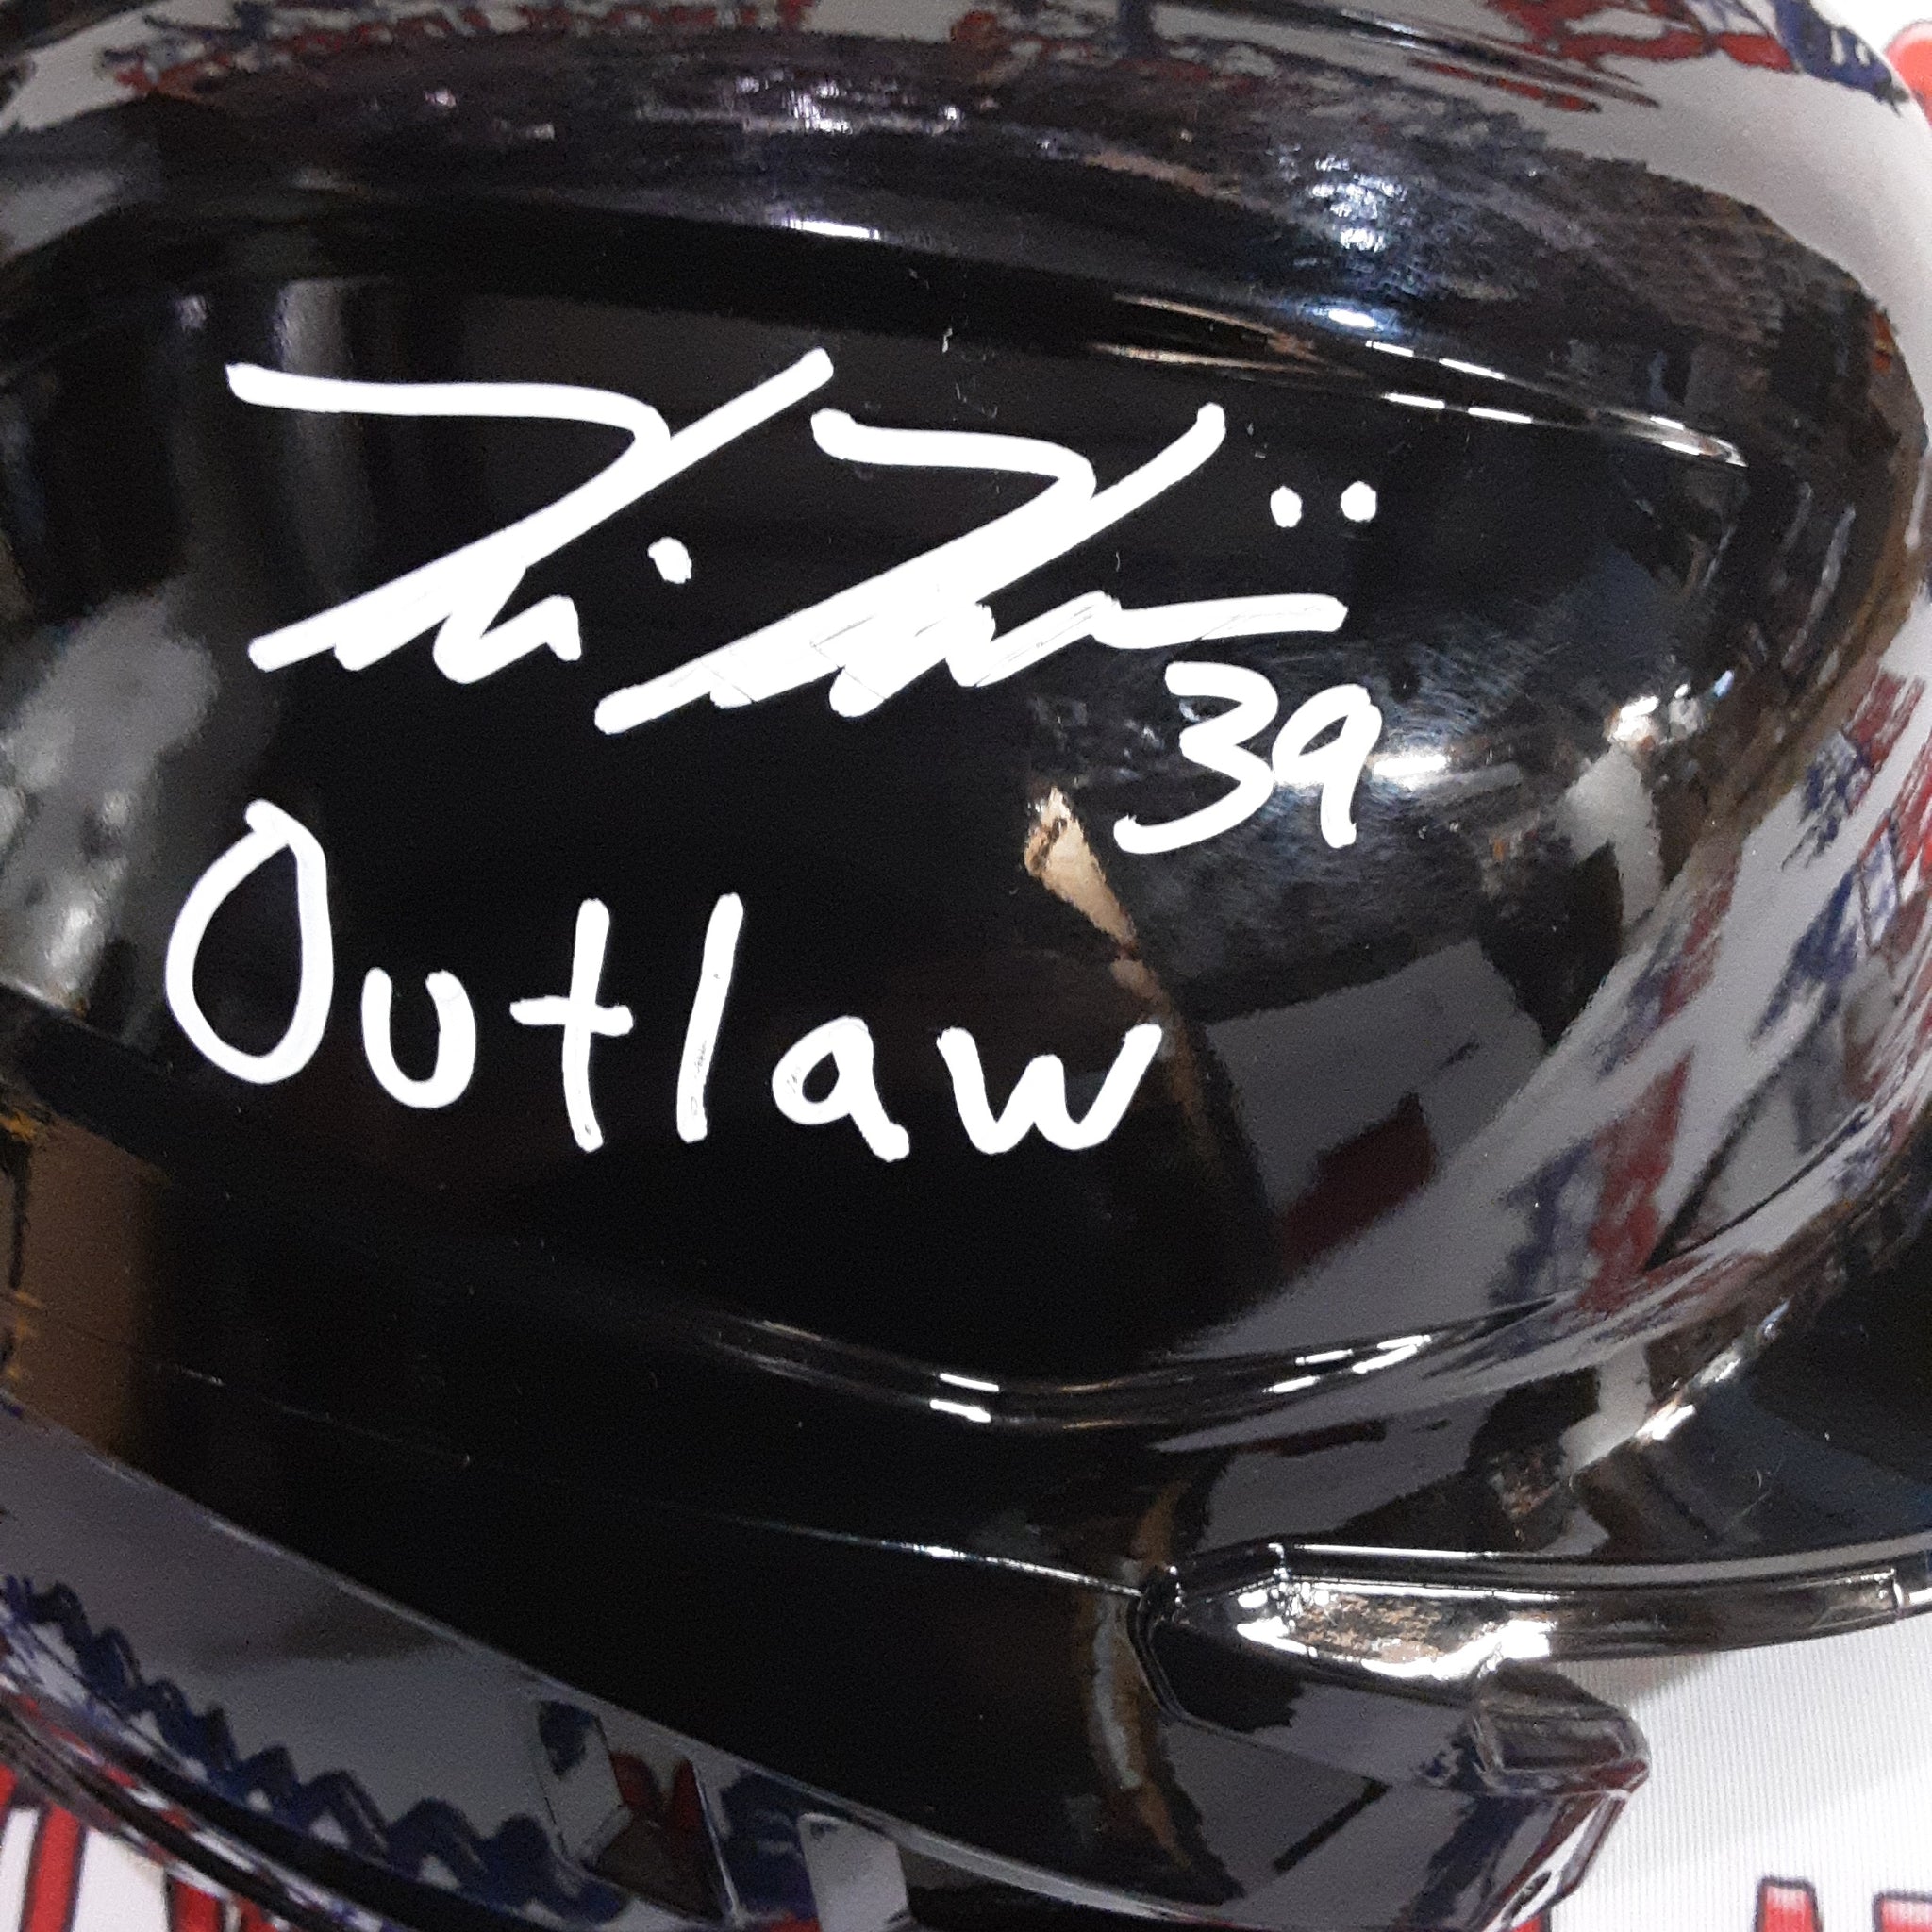 Kevin Kiermaier Authentic Signed Pro Style Batting Helmet Autographed with Inscription JSA.